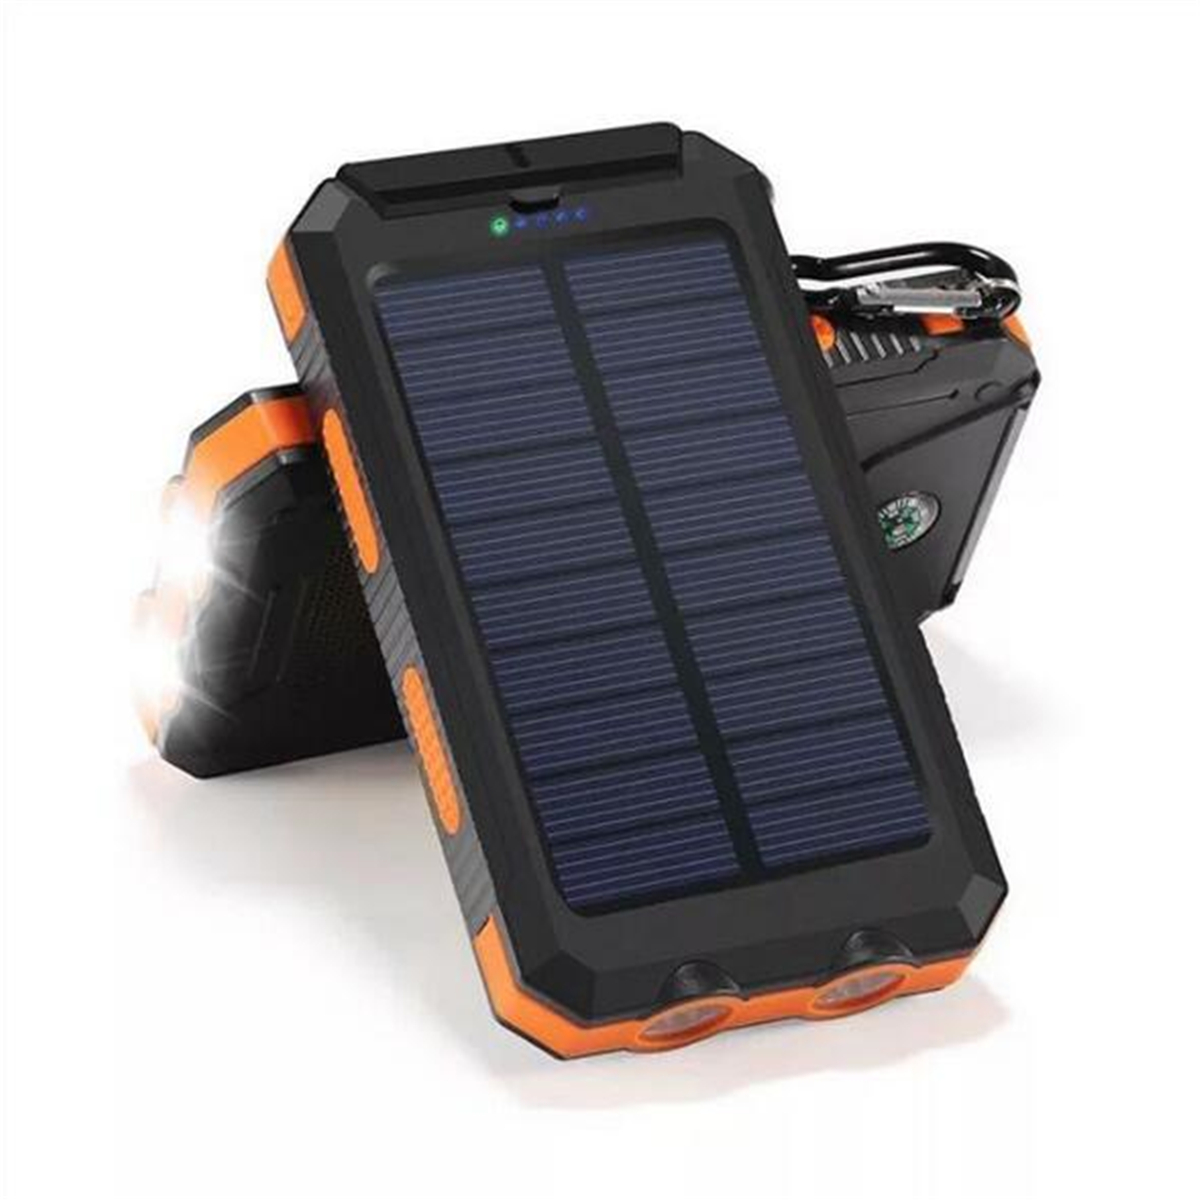 

Bakeey 20000mAh Dual USB DIY Solar Power Bank Case Kit with LED Light Compass